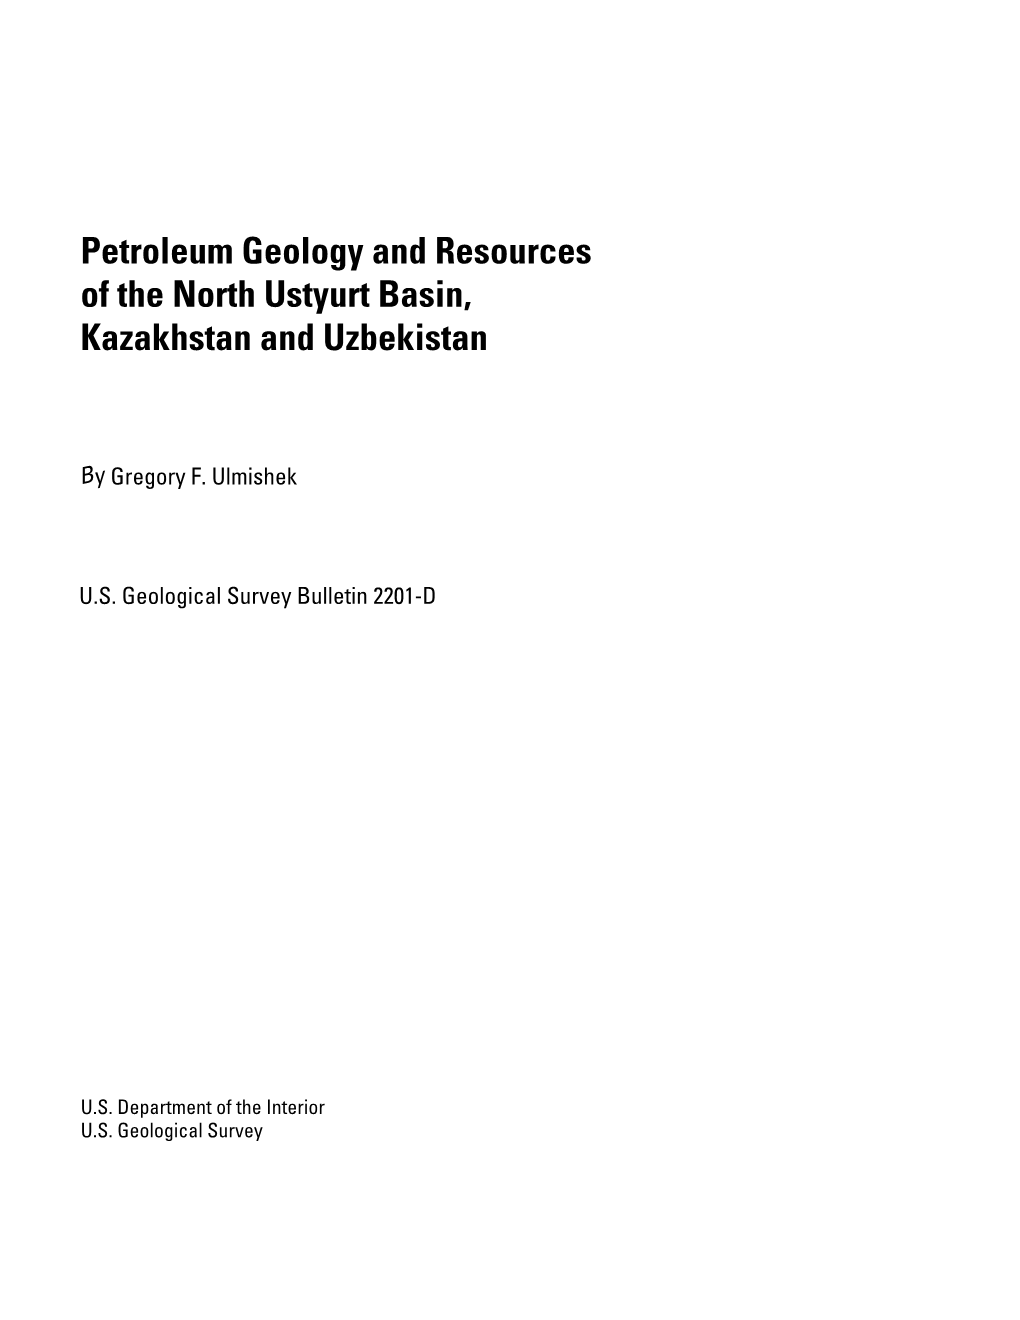 Petroleum Geology and Resources of the North Ustyurt Basin, Kazakhstan and Uzbekistan